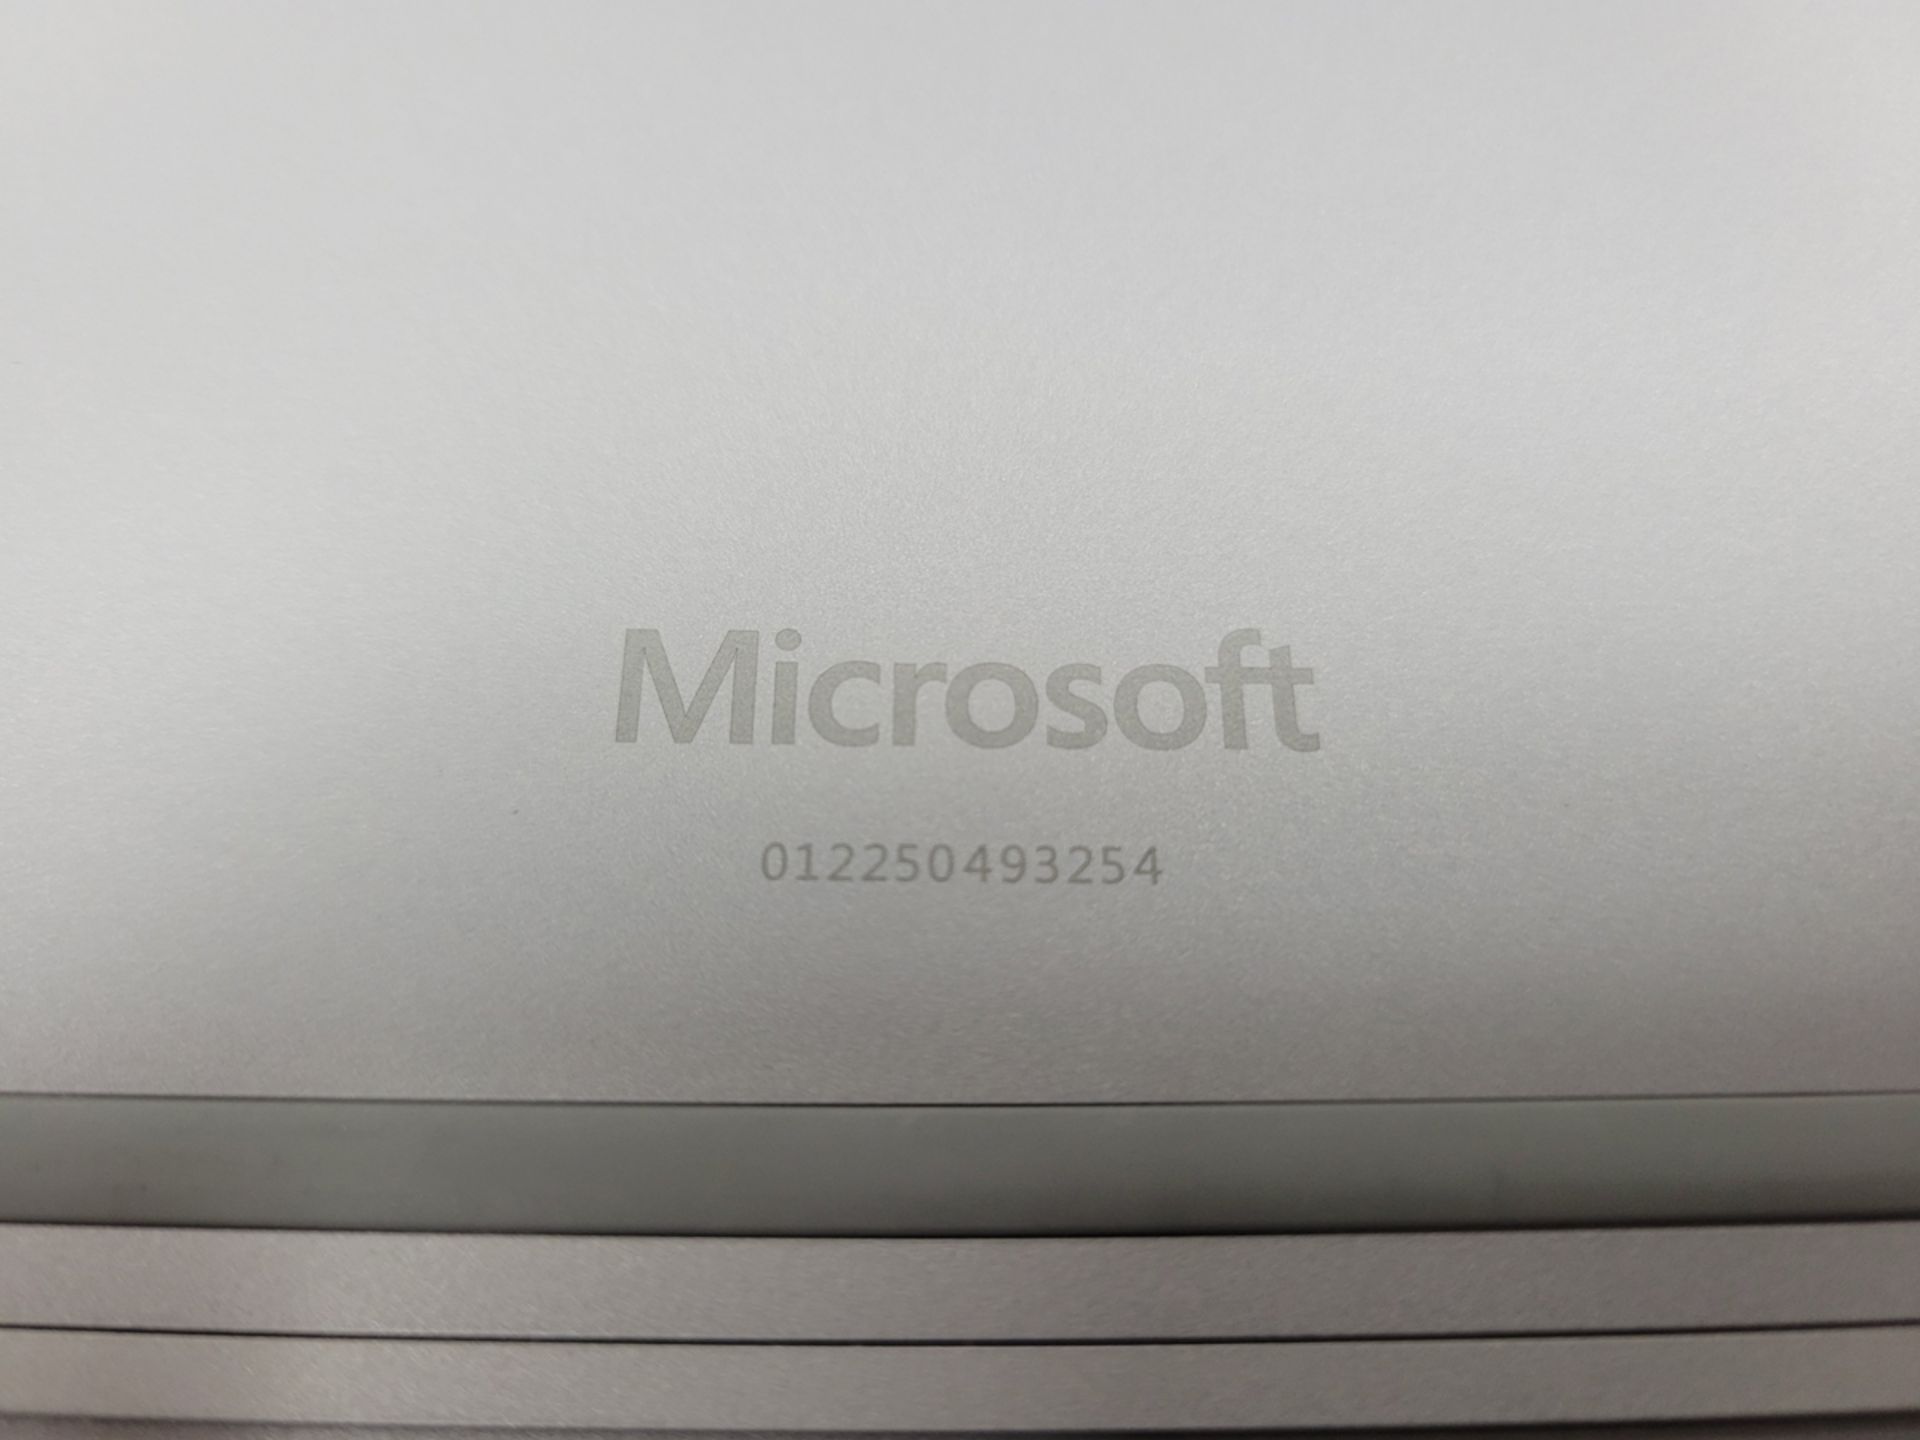 Microsoft Surface Book 2 13" w/ Intel Core i7 Processor - Image 4 of 8